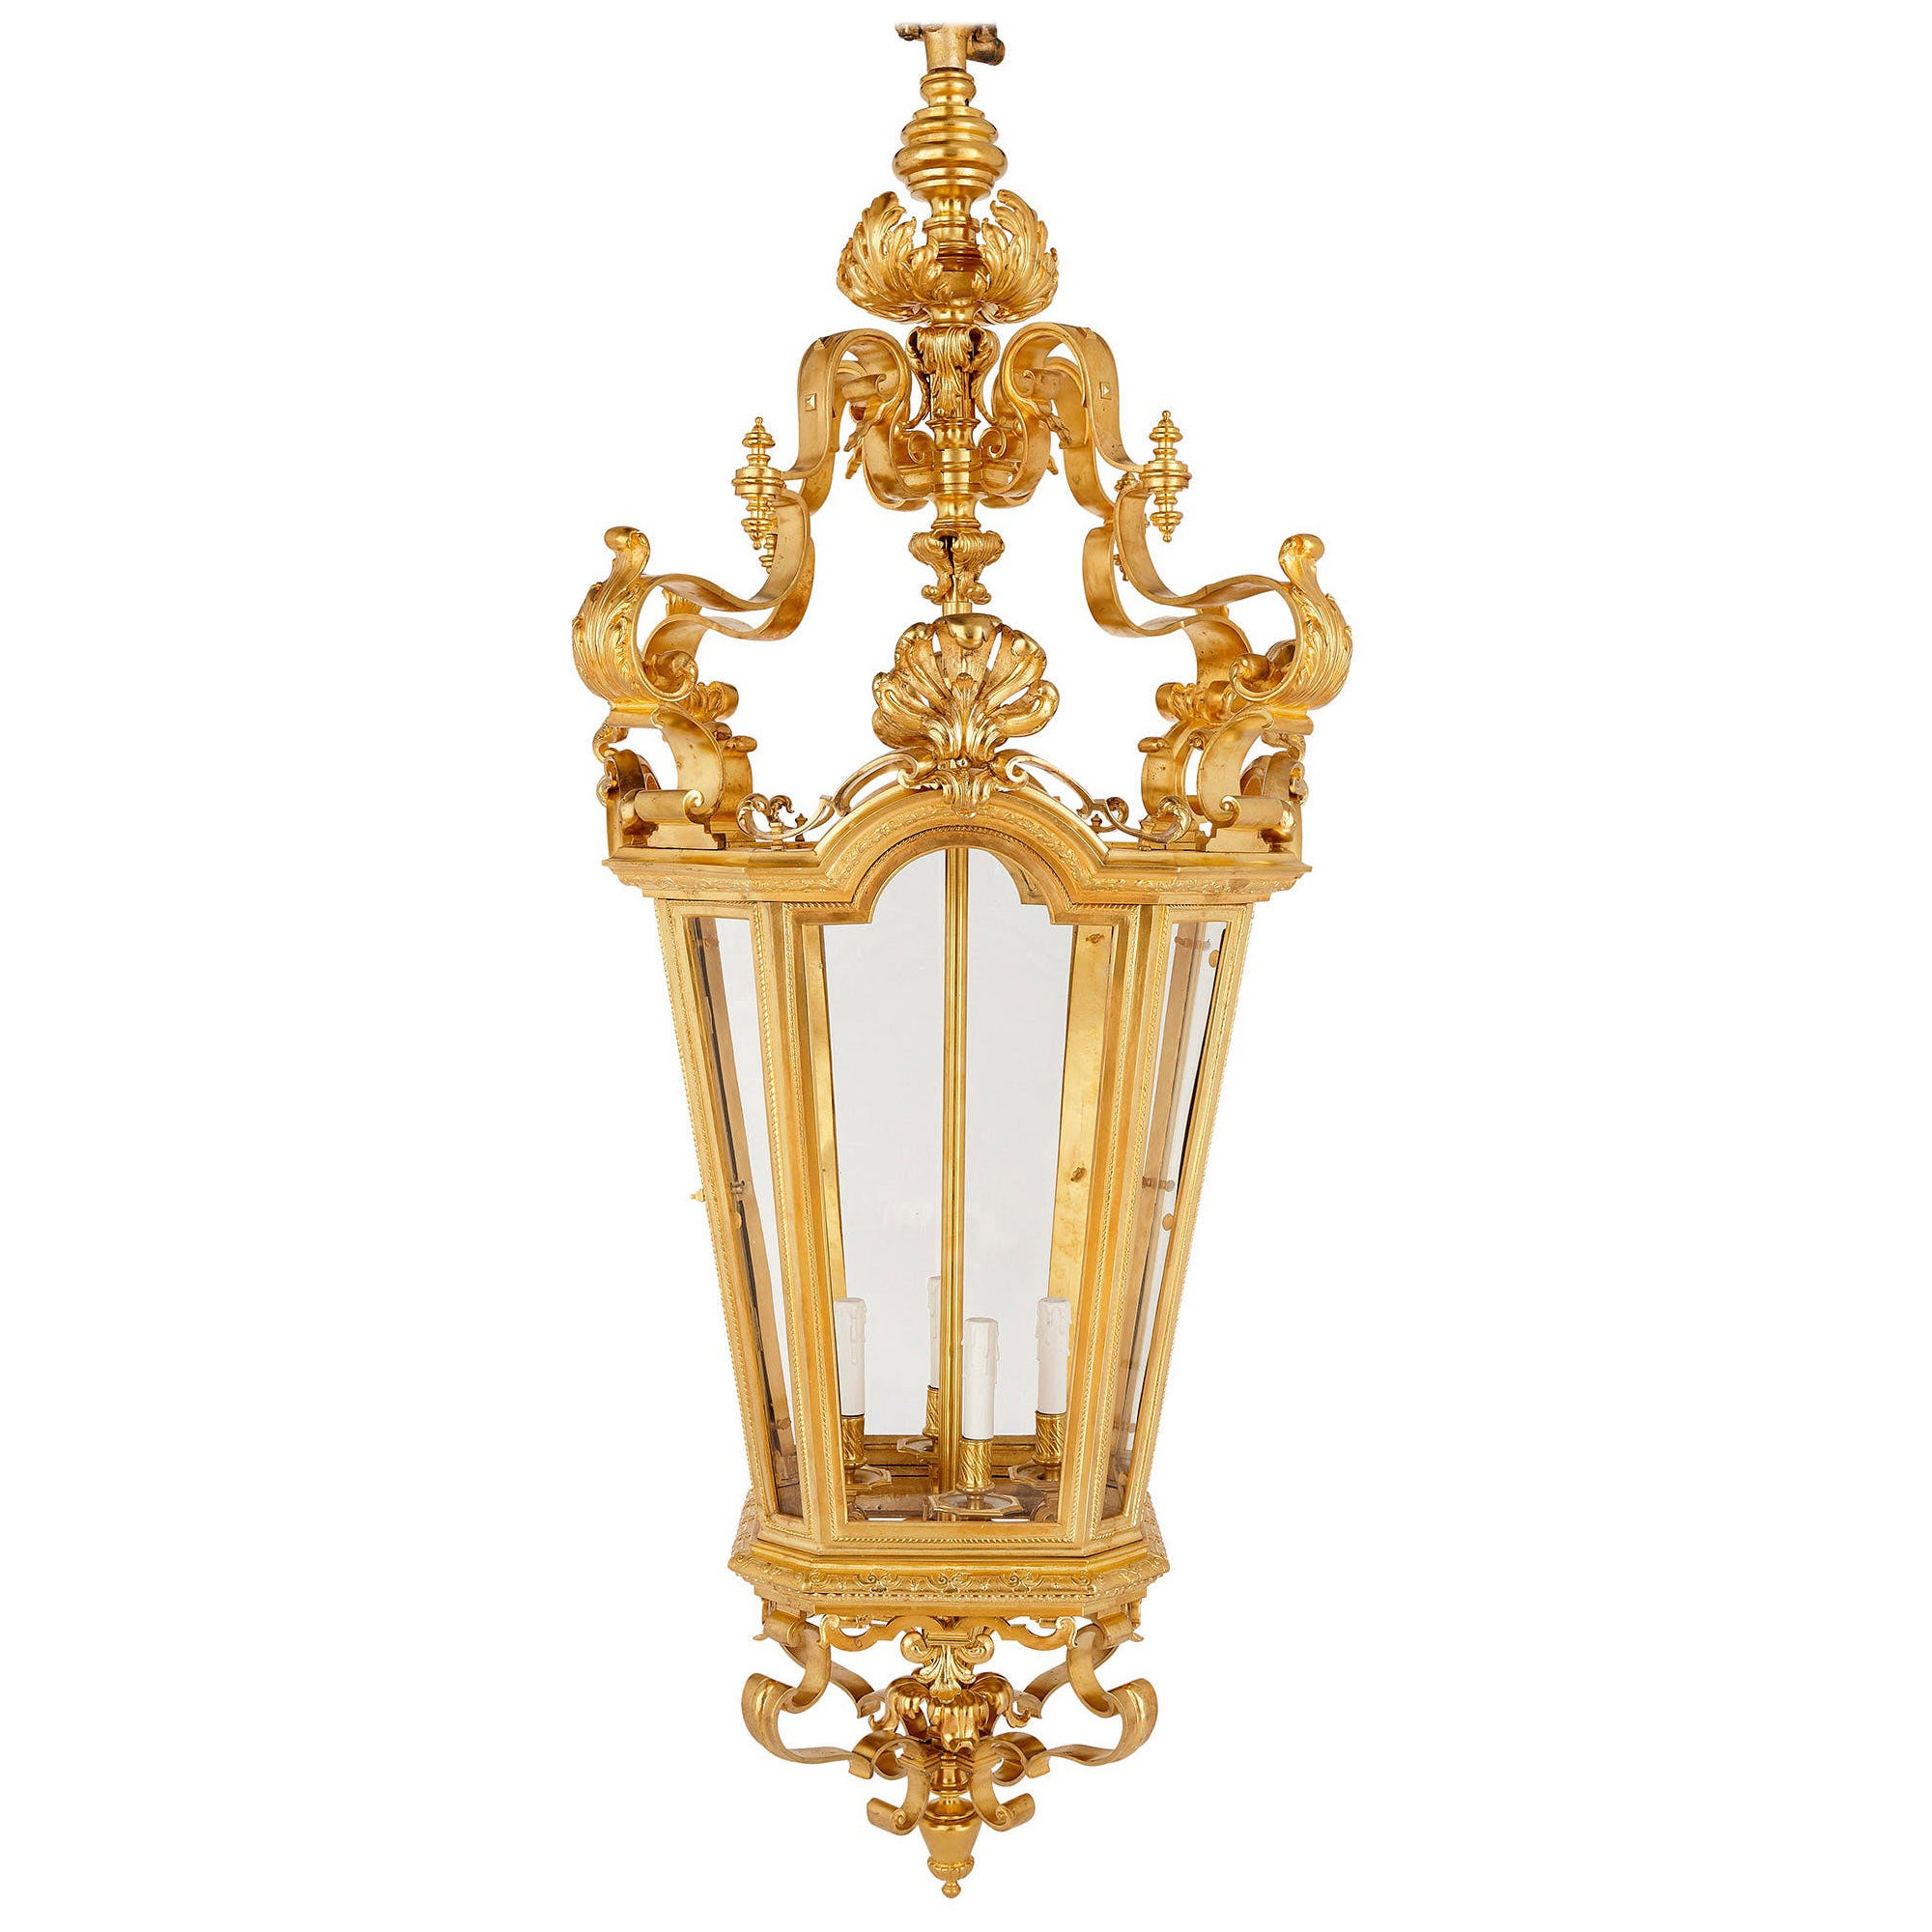 Très grande lanterne en bronze doré de style rococo d'époque Napoléon III en vente